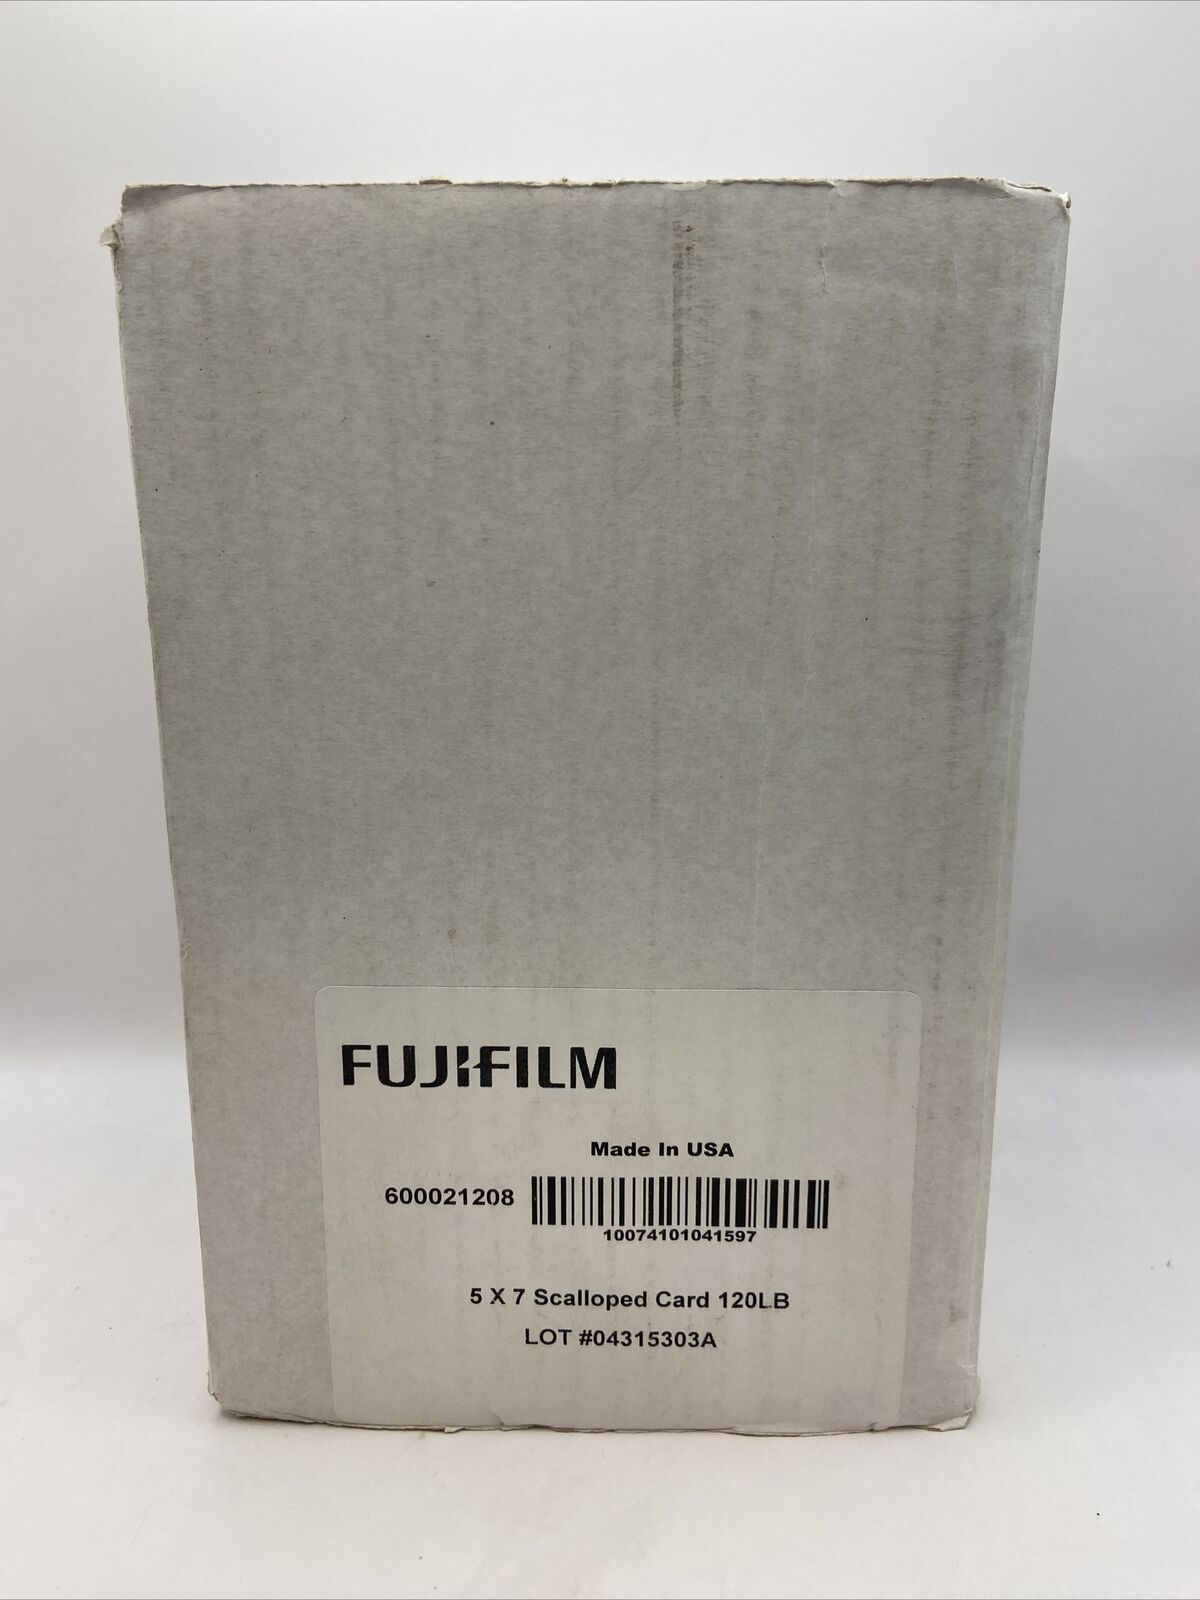 Fujifilm 5x7 Scalloped Card 120lb 600021208